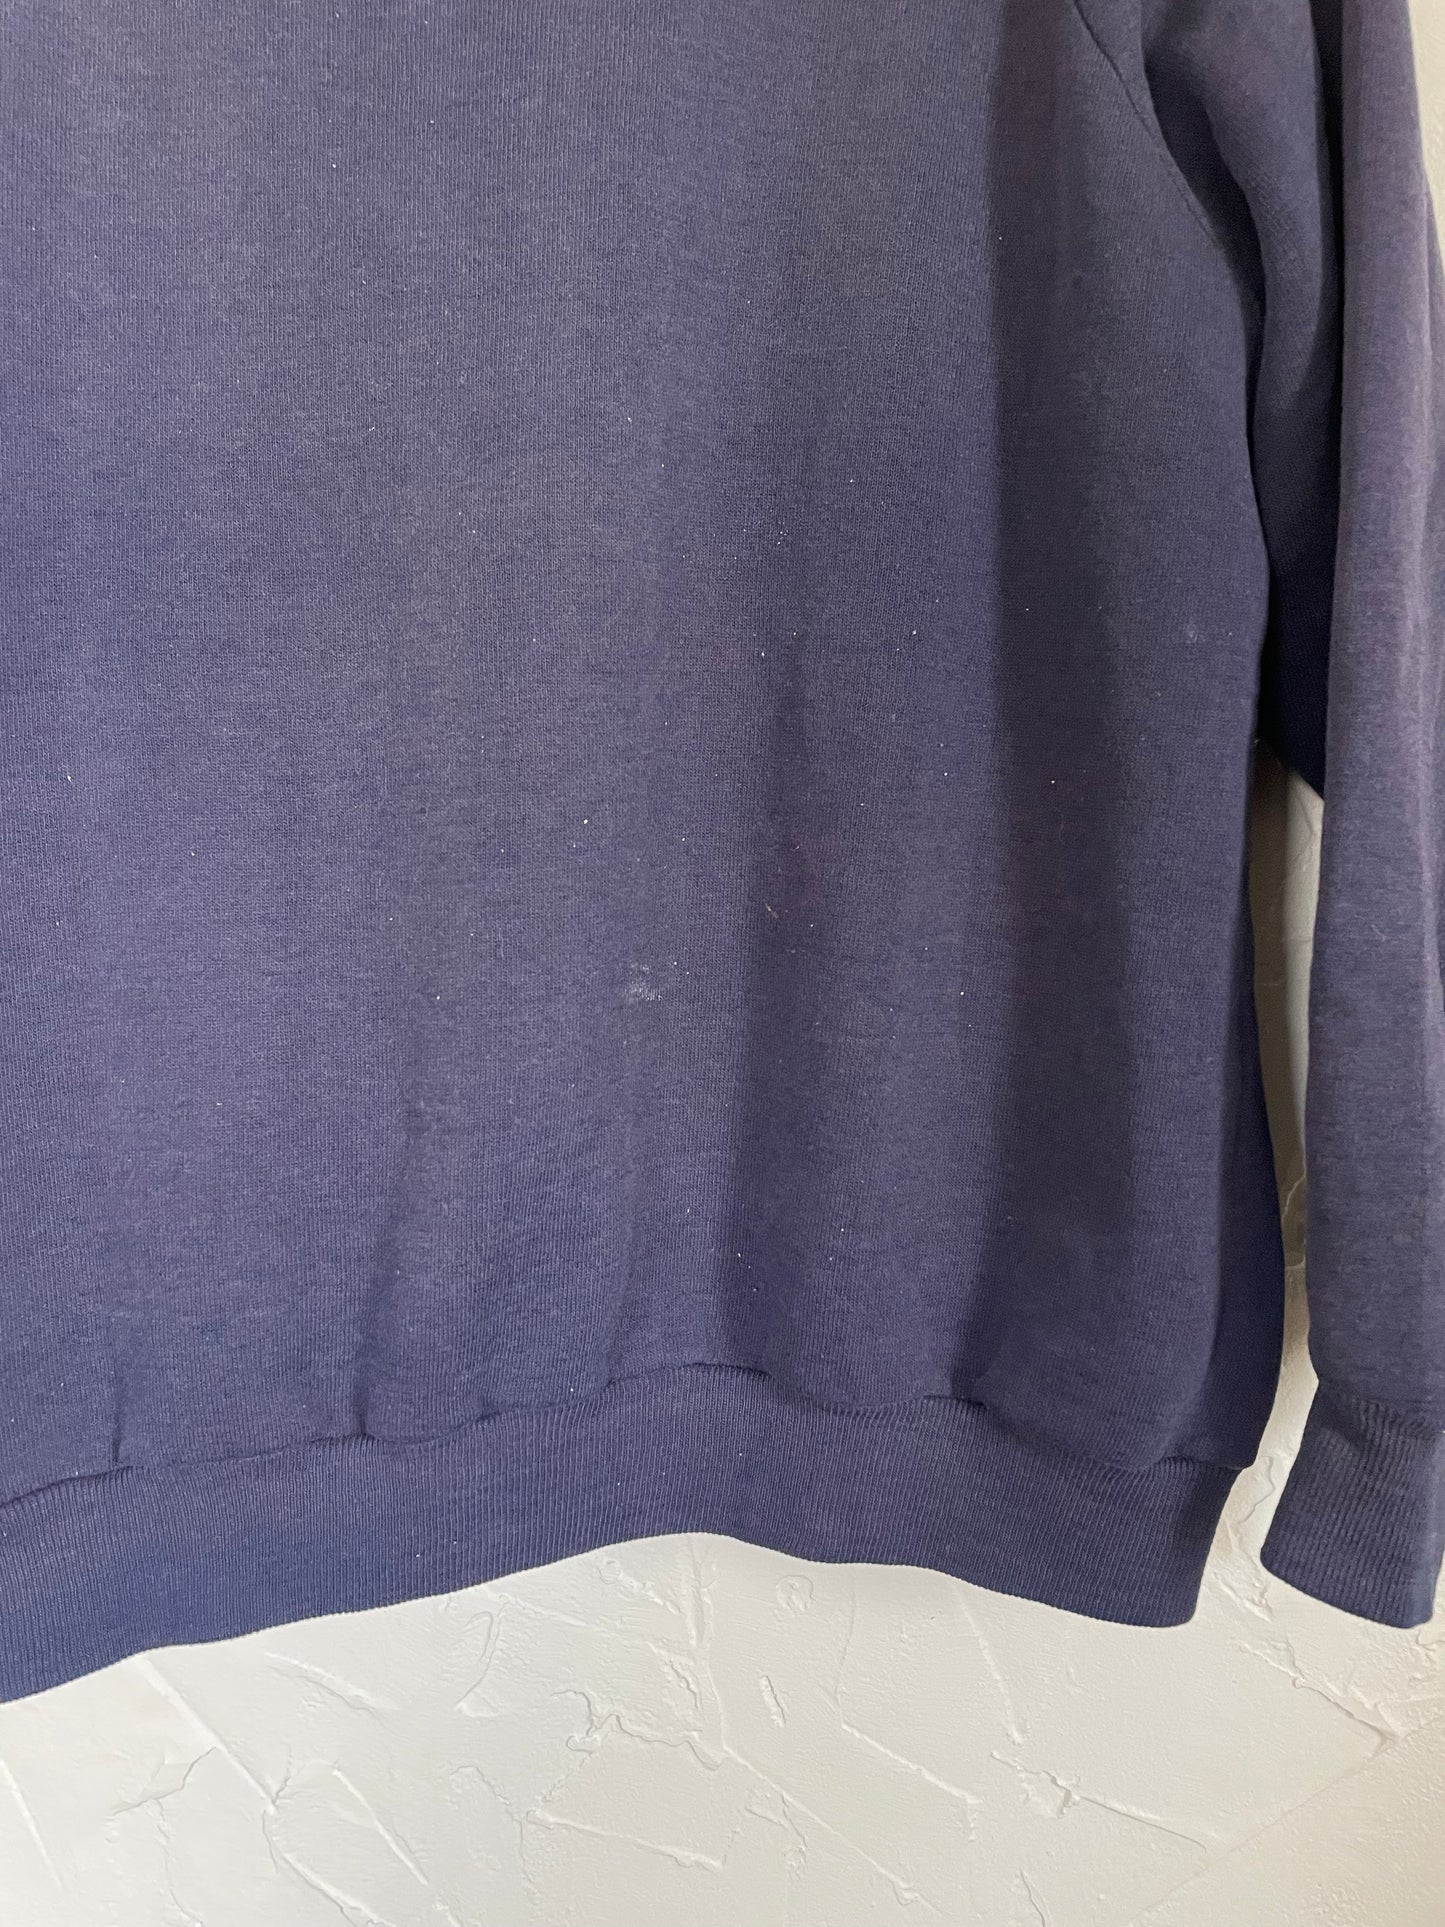 70s/80s Blank Navy Blue Sweatshirt